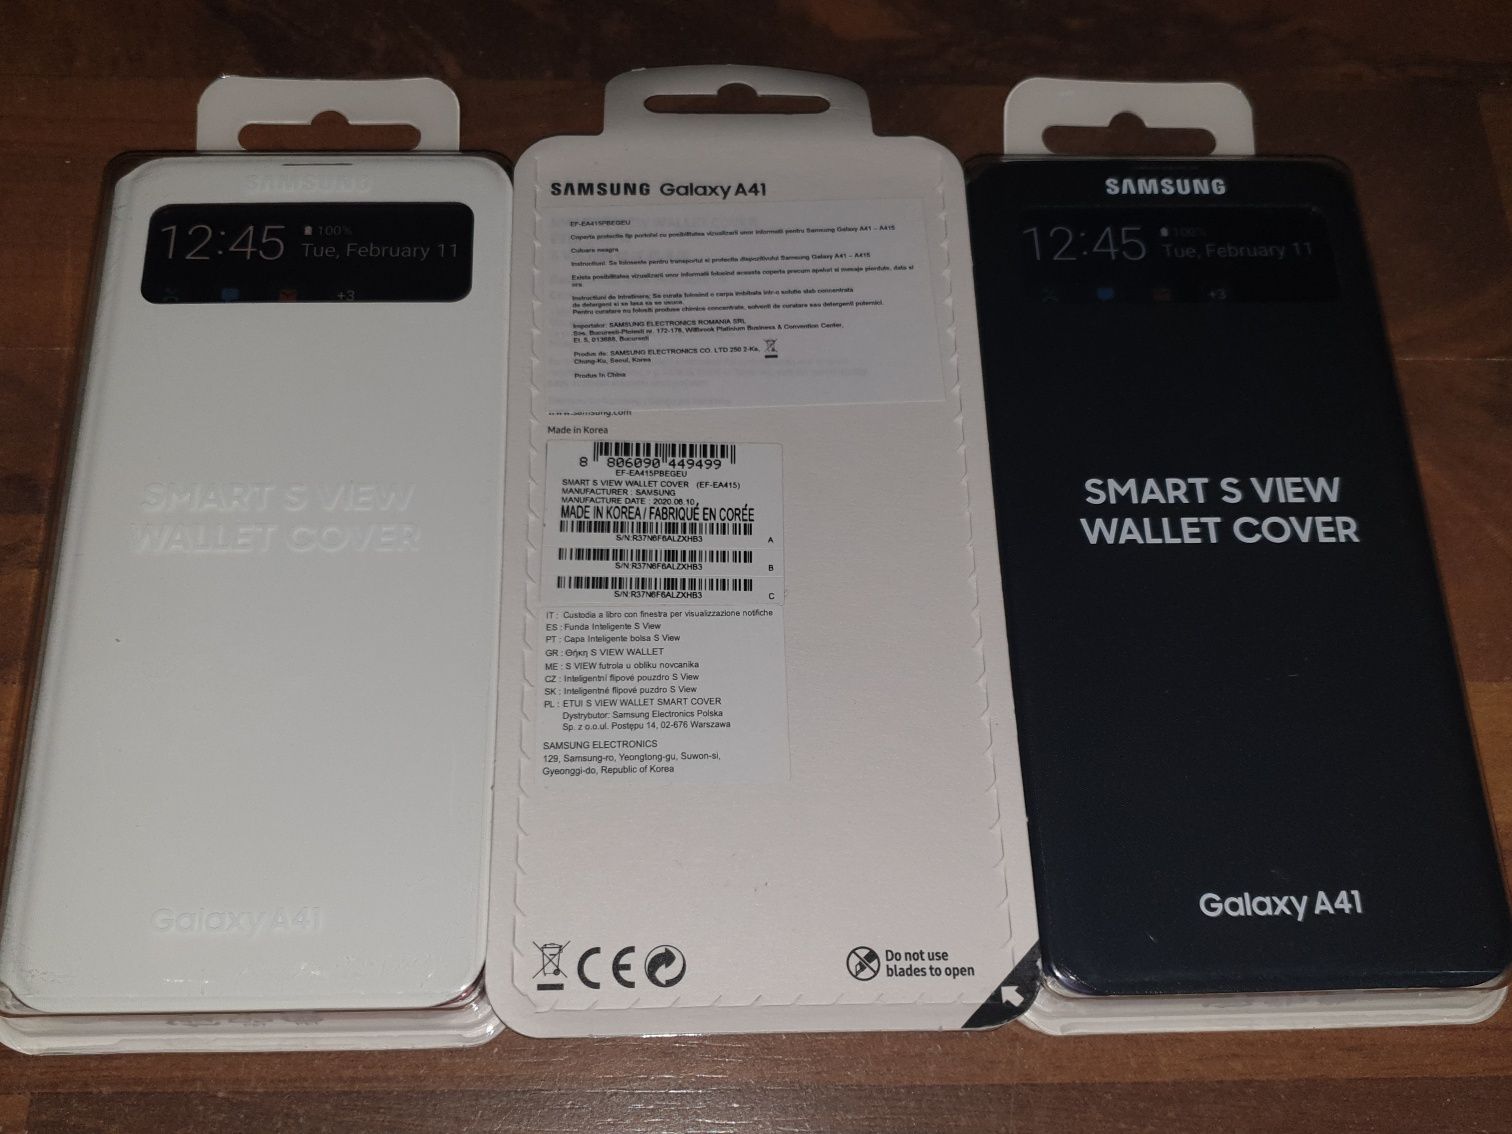 Husa flip smart activa originala Samsung Smart S View Wallet Cover A41